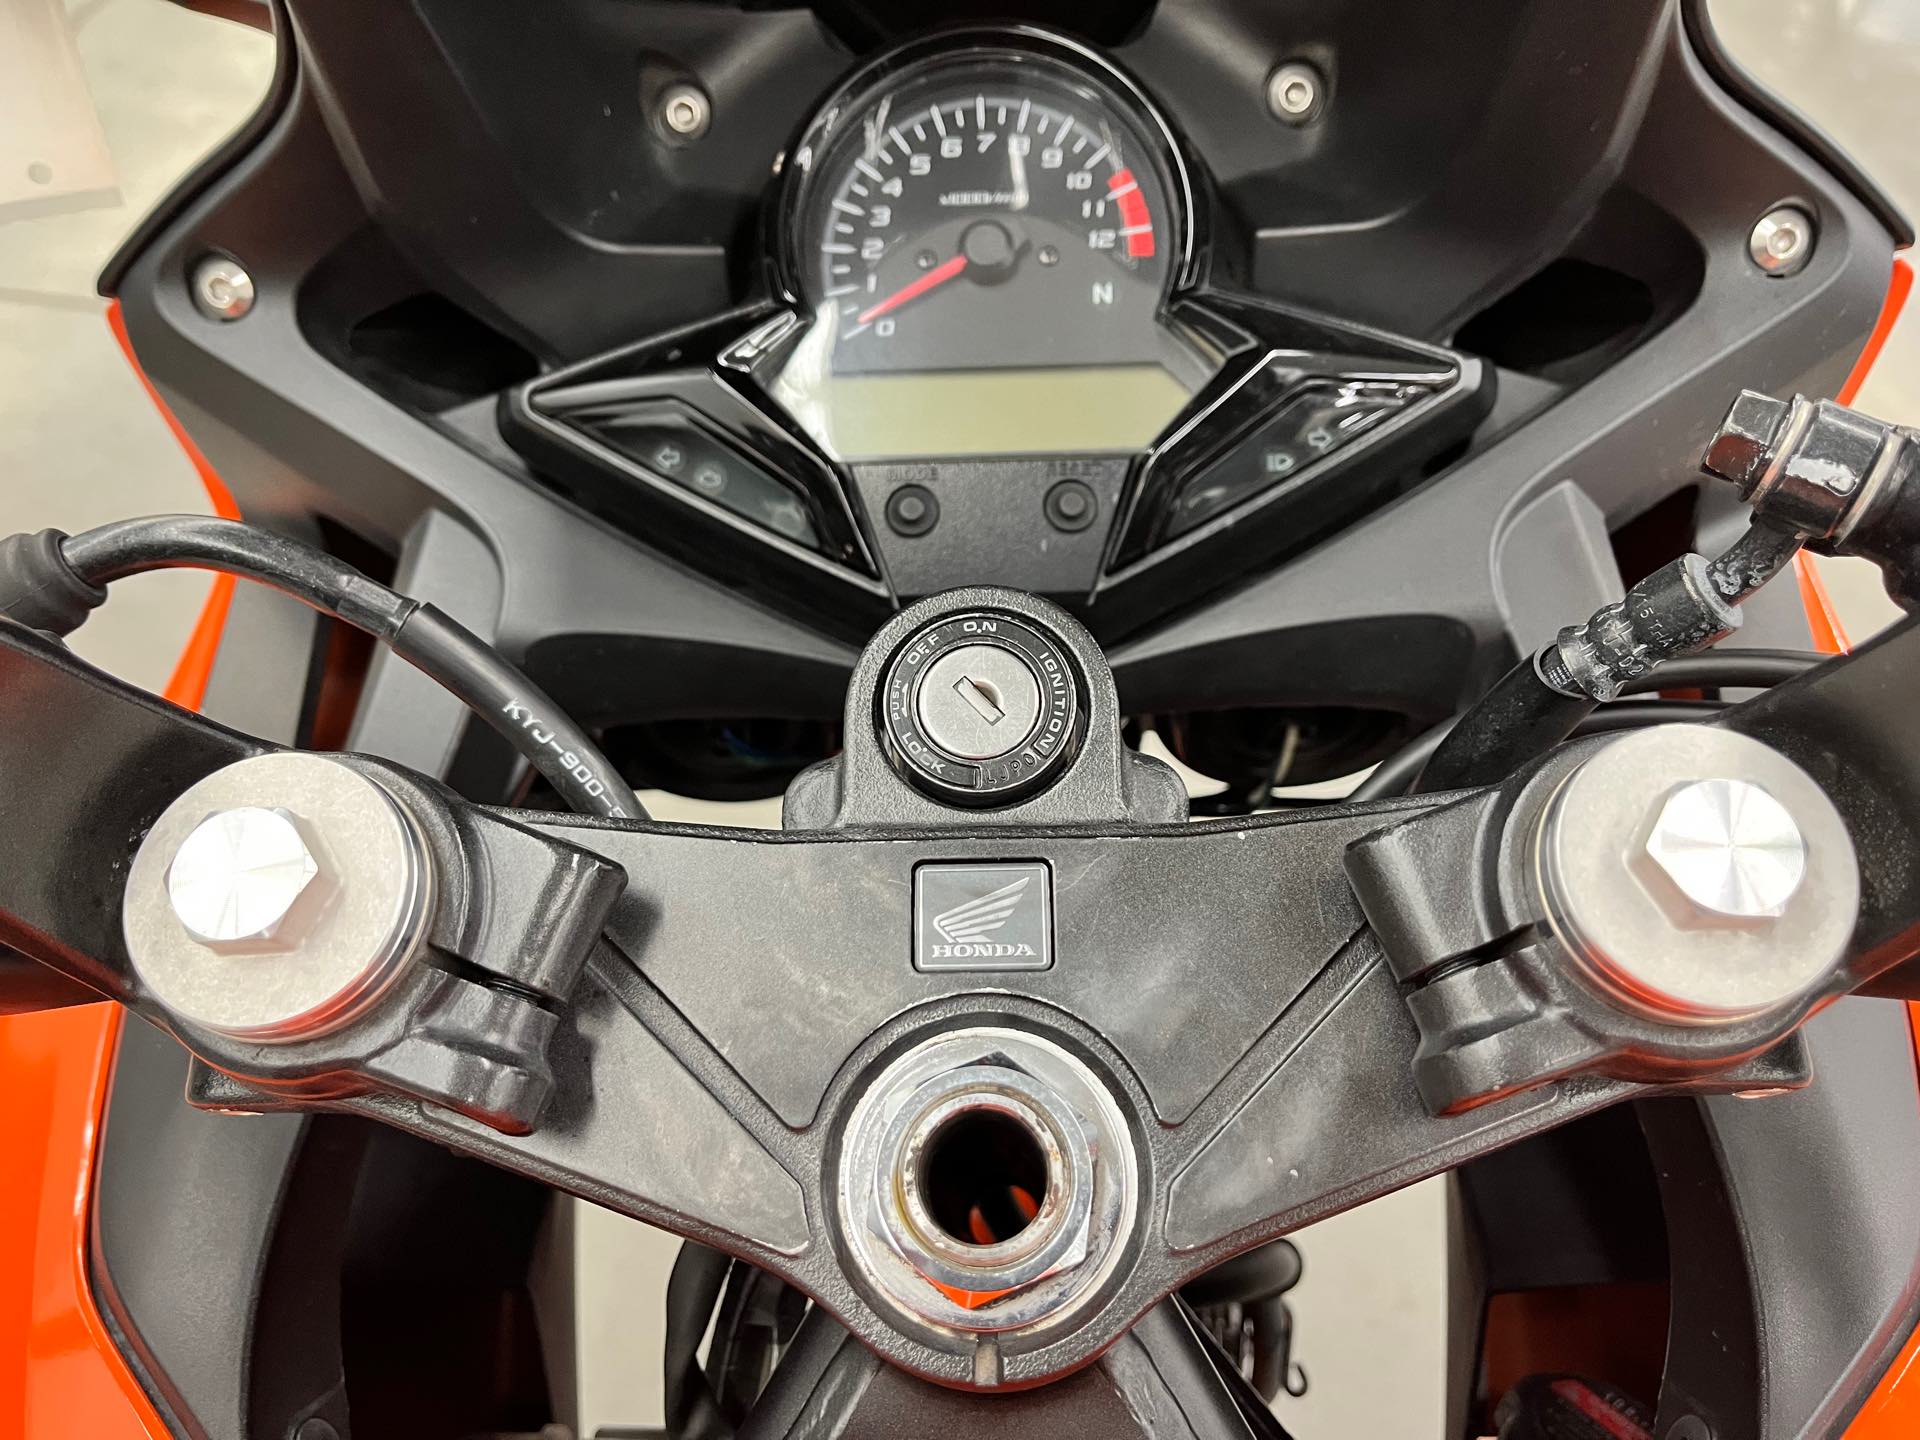 2016 Honda CBR 300R at Aces Motorcycles - Denver